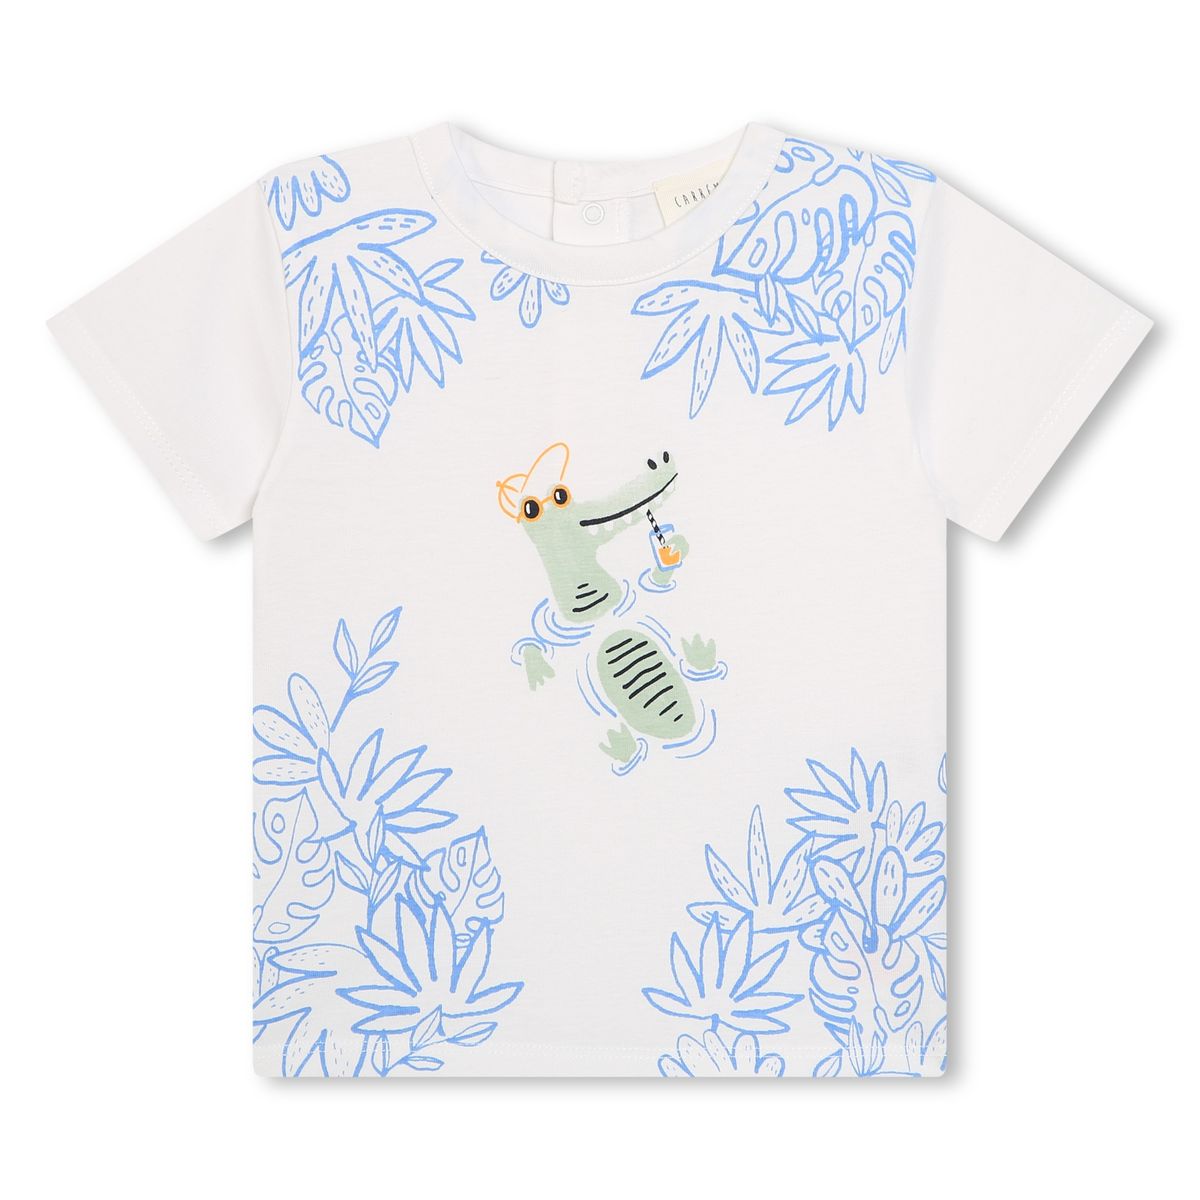 Ensemble bébé garçon t-shirt + sarouel Kyushu